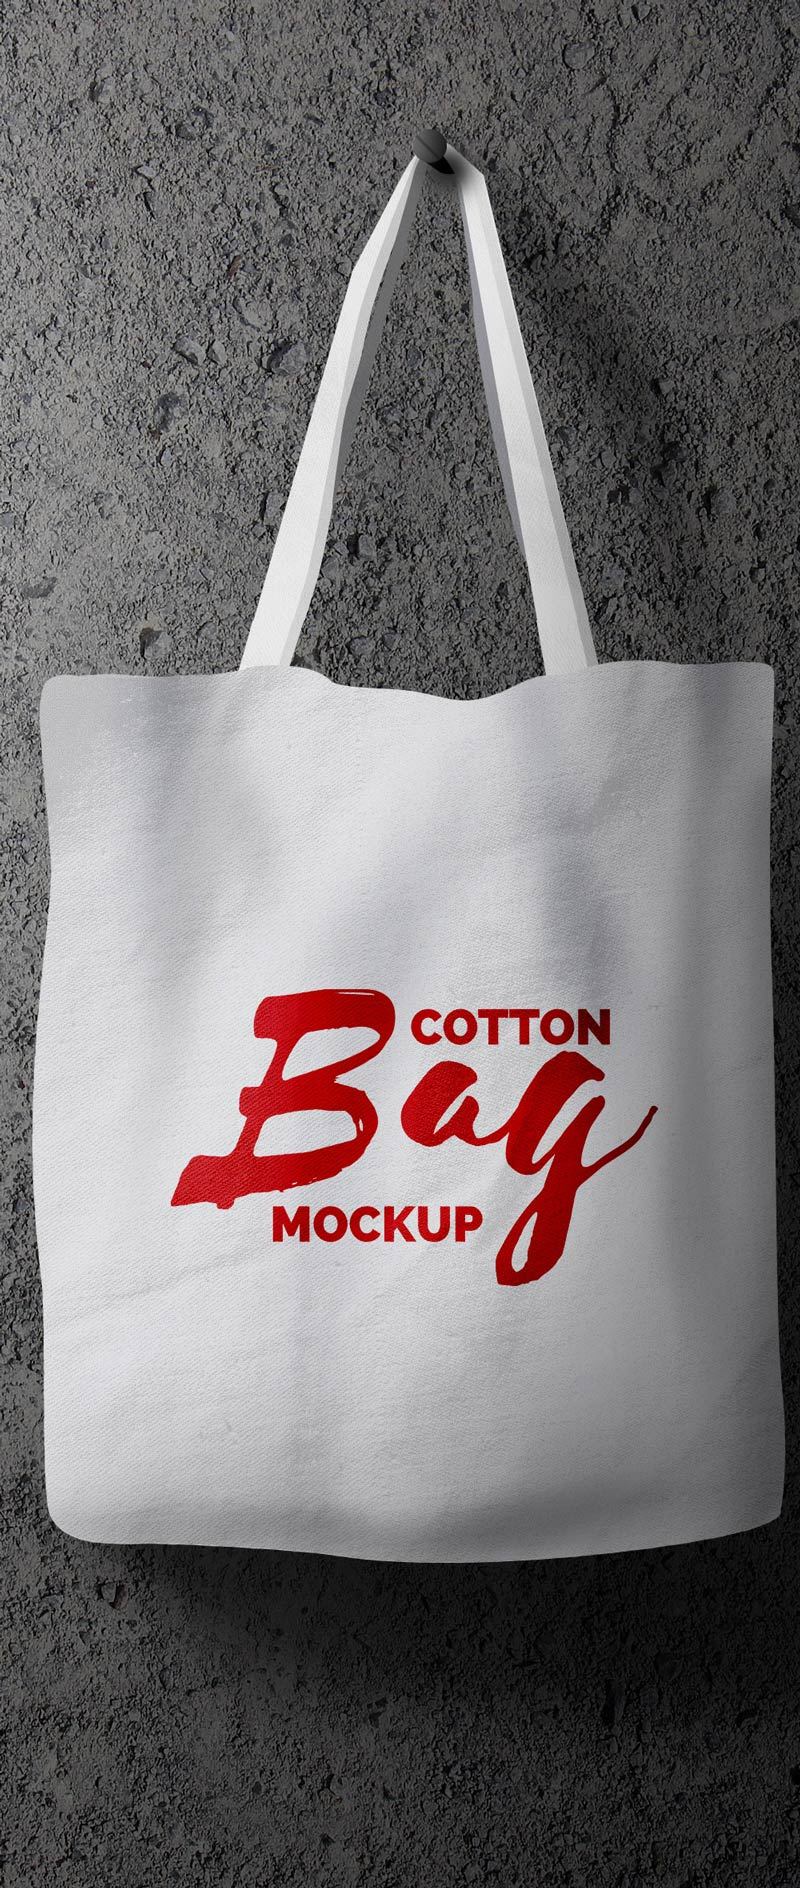 Hanging Cotton Bag Mockup Free PSD – Download PSD